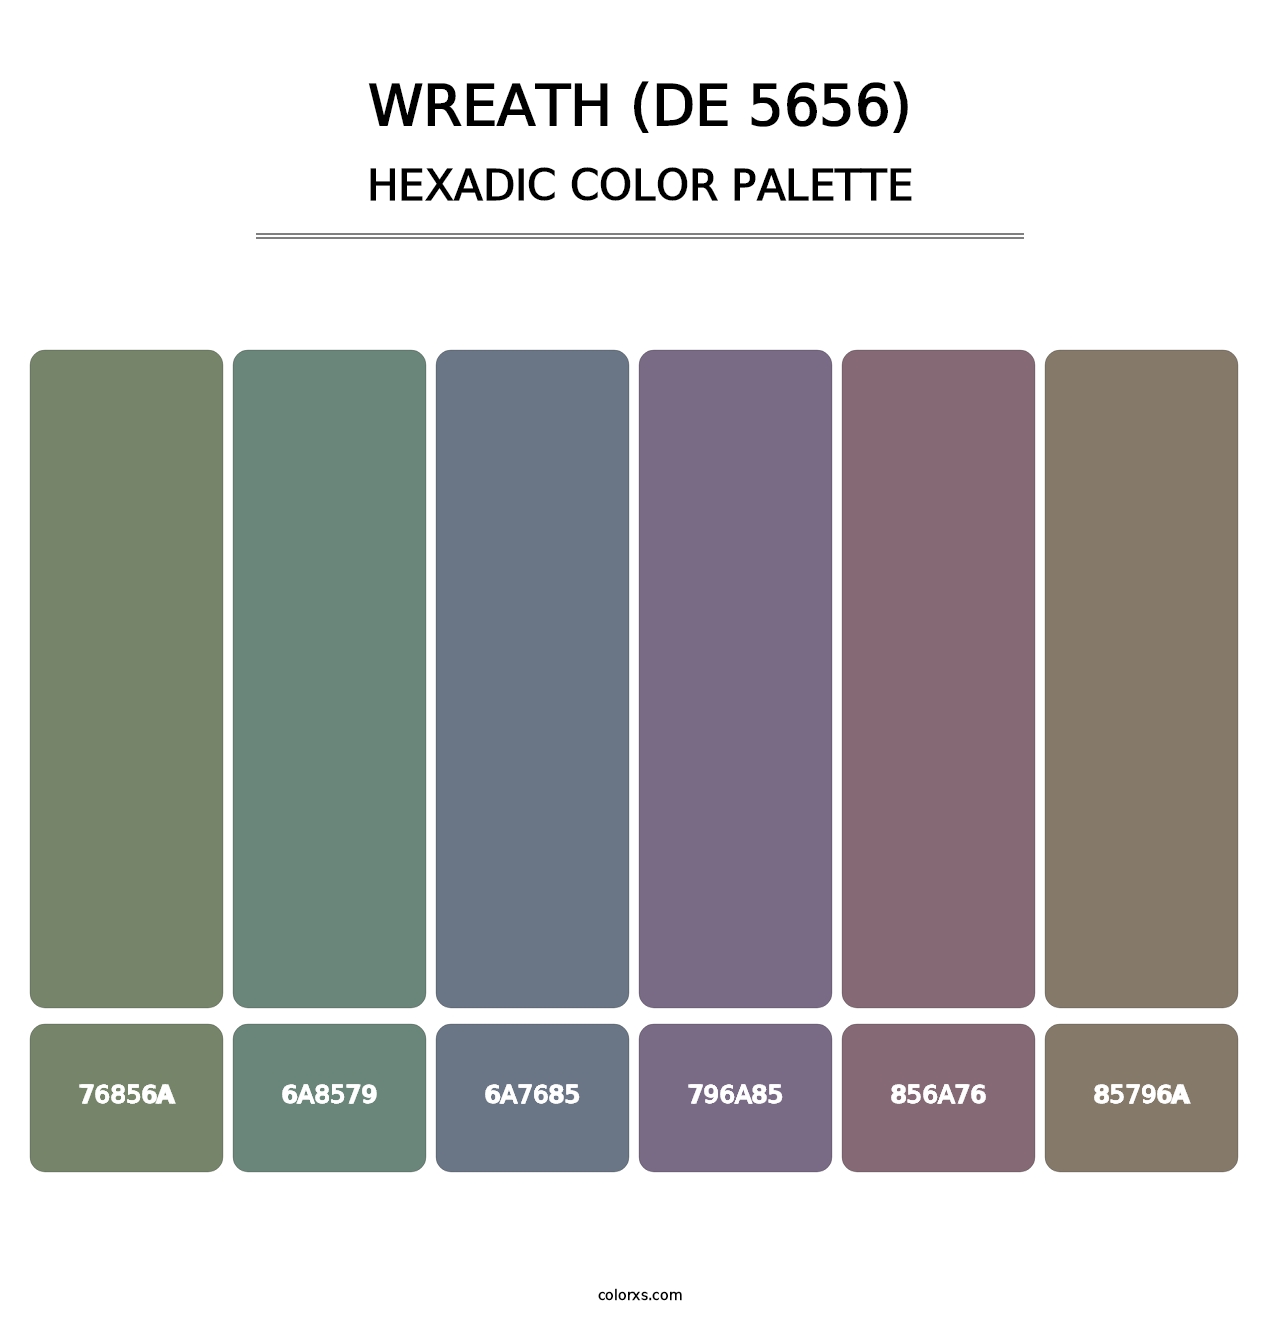 Wreath (DE 5656) - Hexadic Color Palette